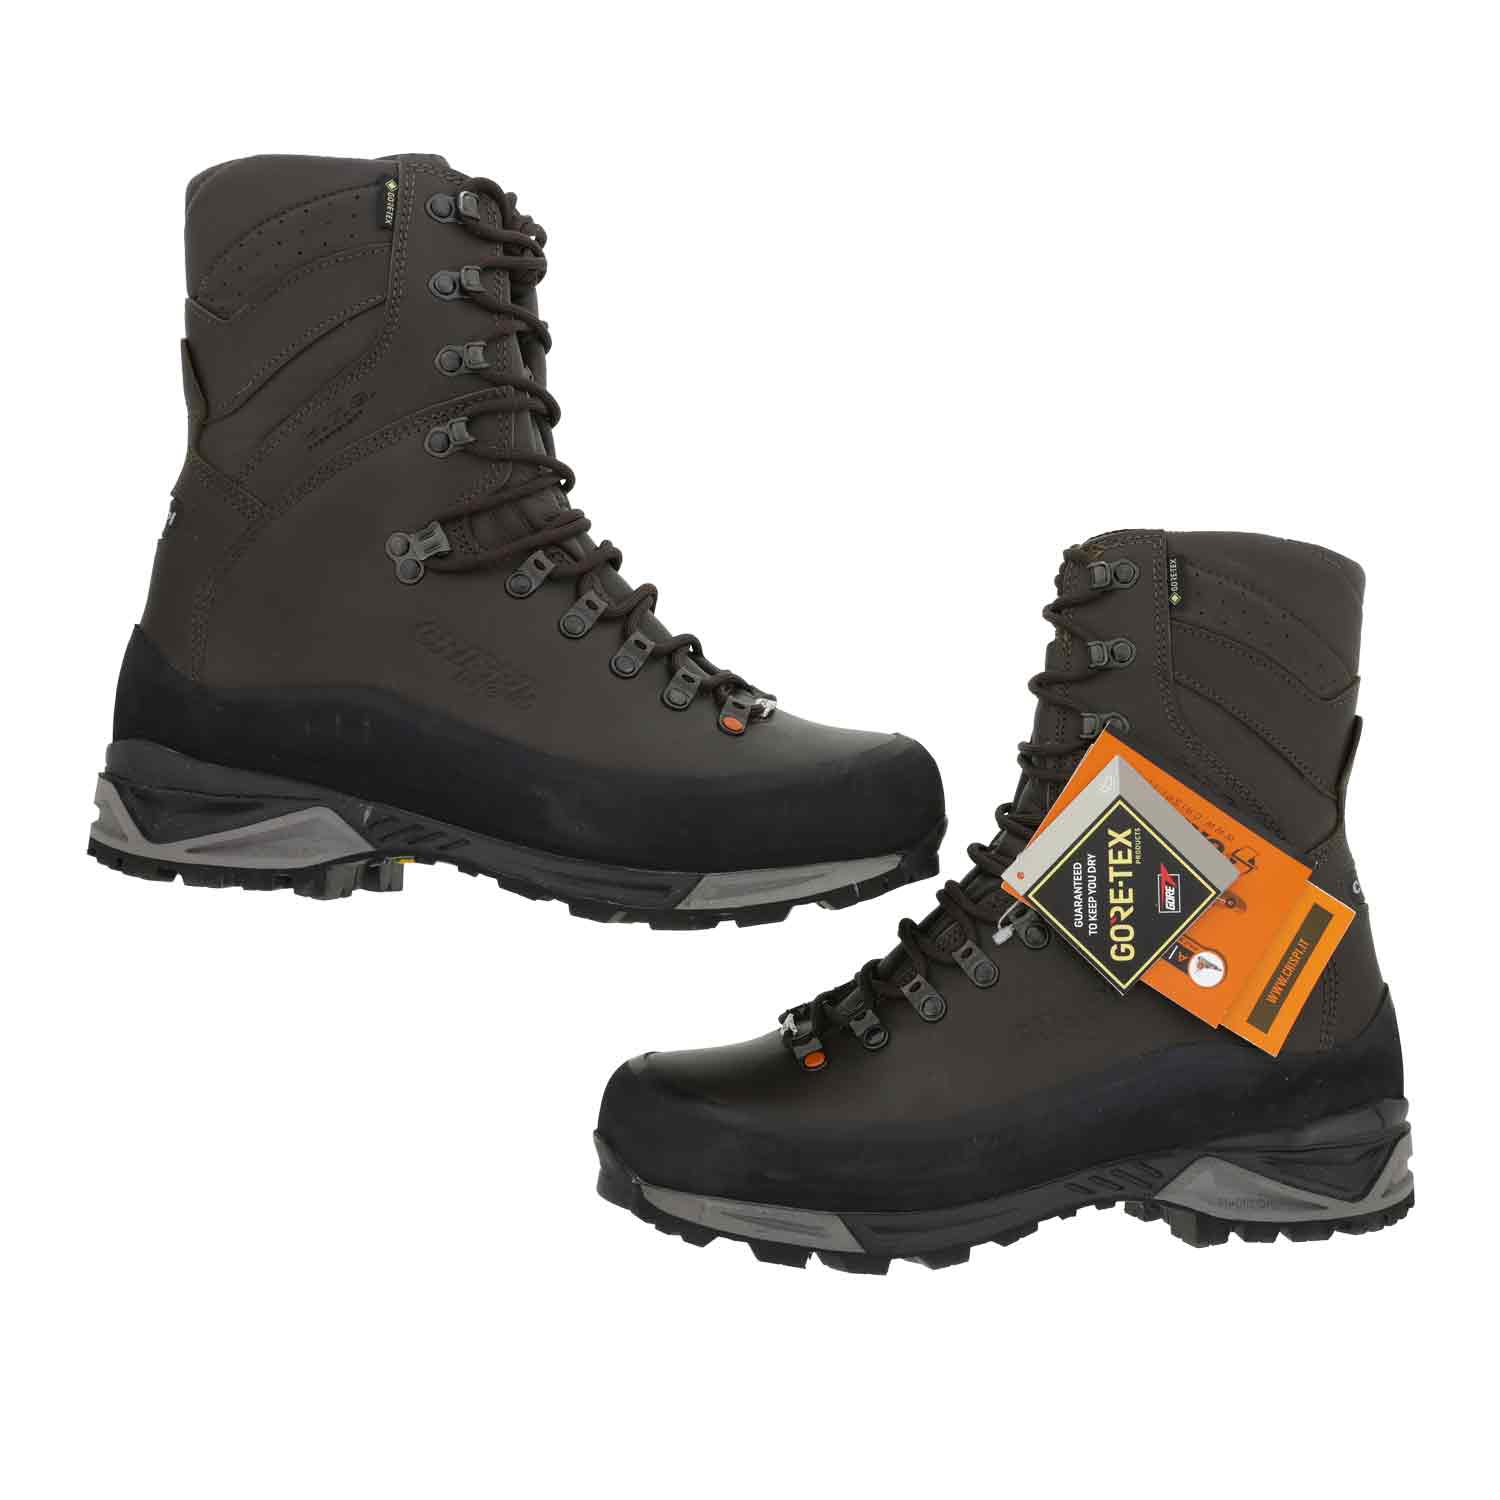 Crispi Wild Rock GTX Insulated Boots (Open Box X1037034)